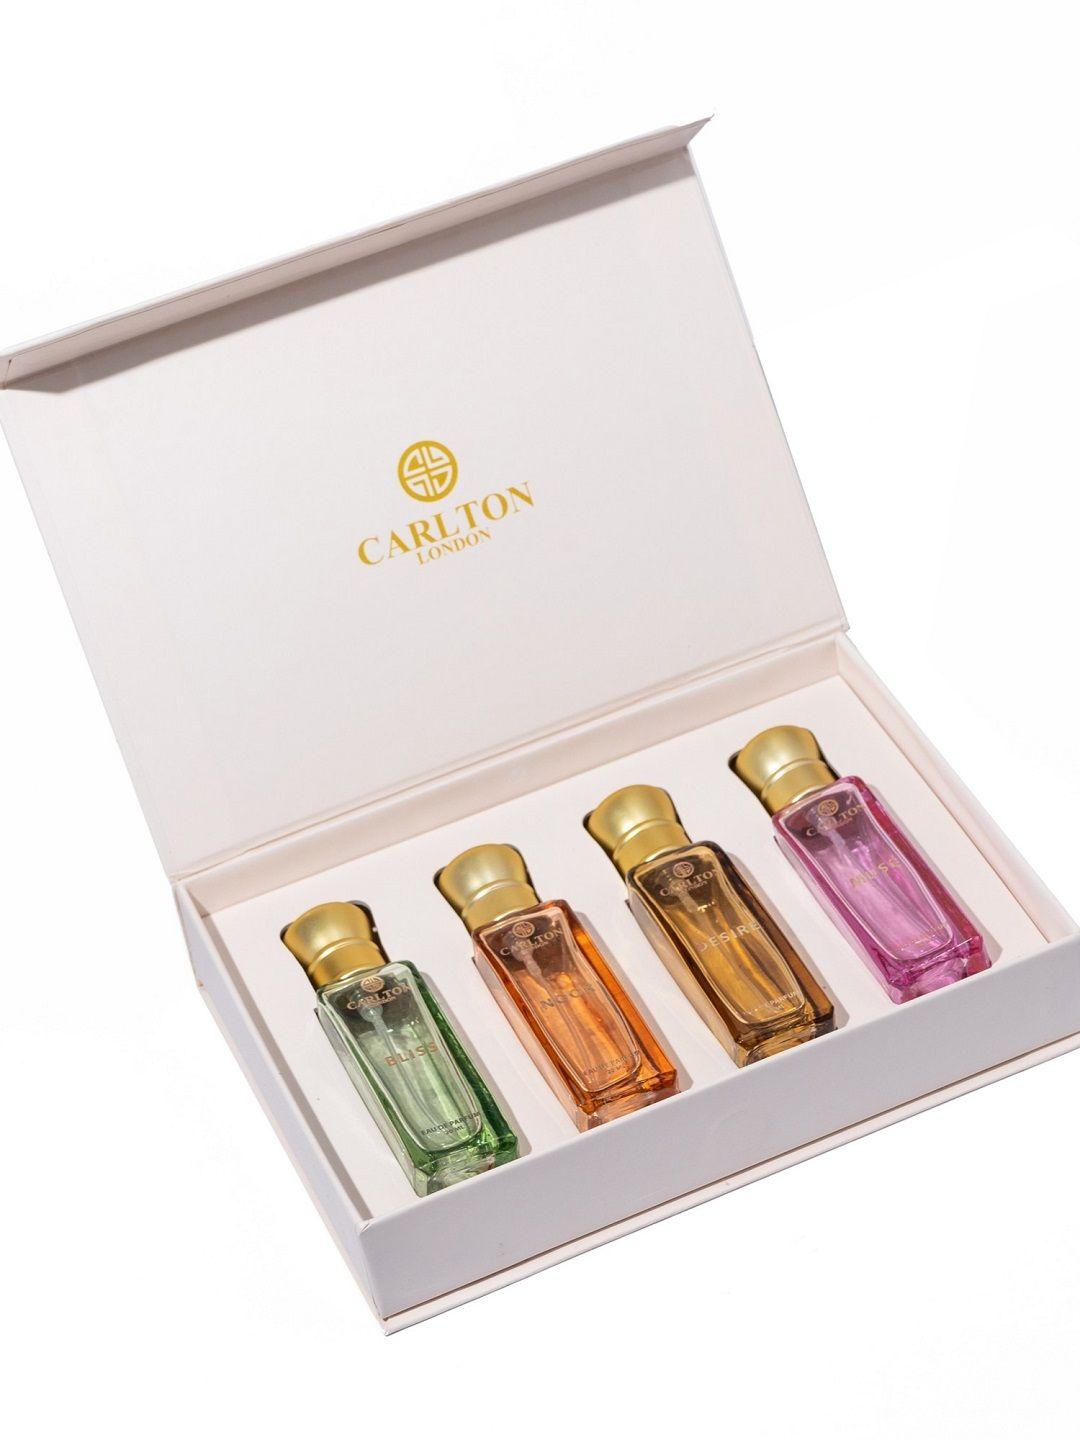 carlton-london-fantasy-collection-set-of-4-eau-de-parfum---20ml-each